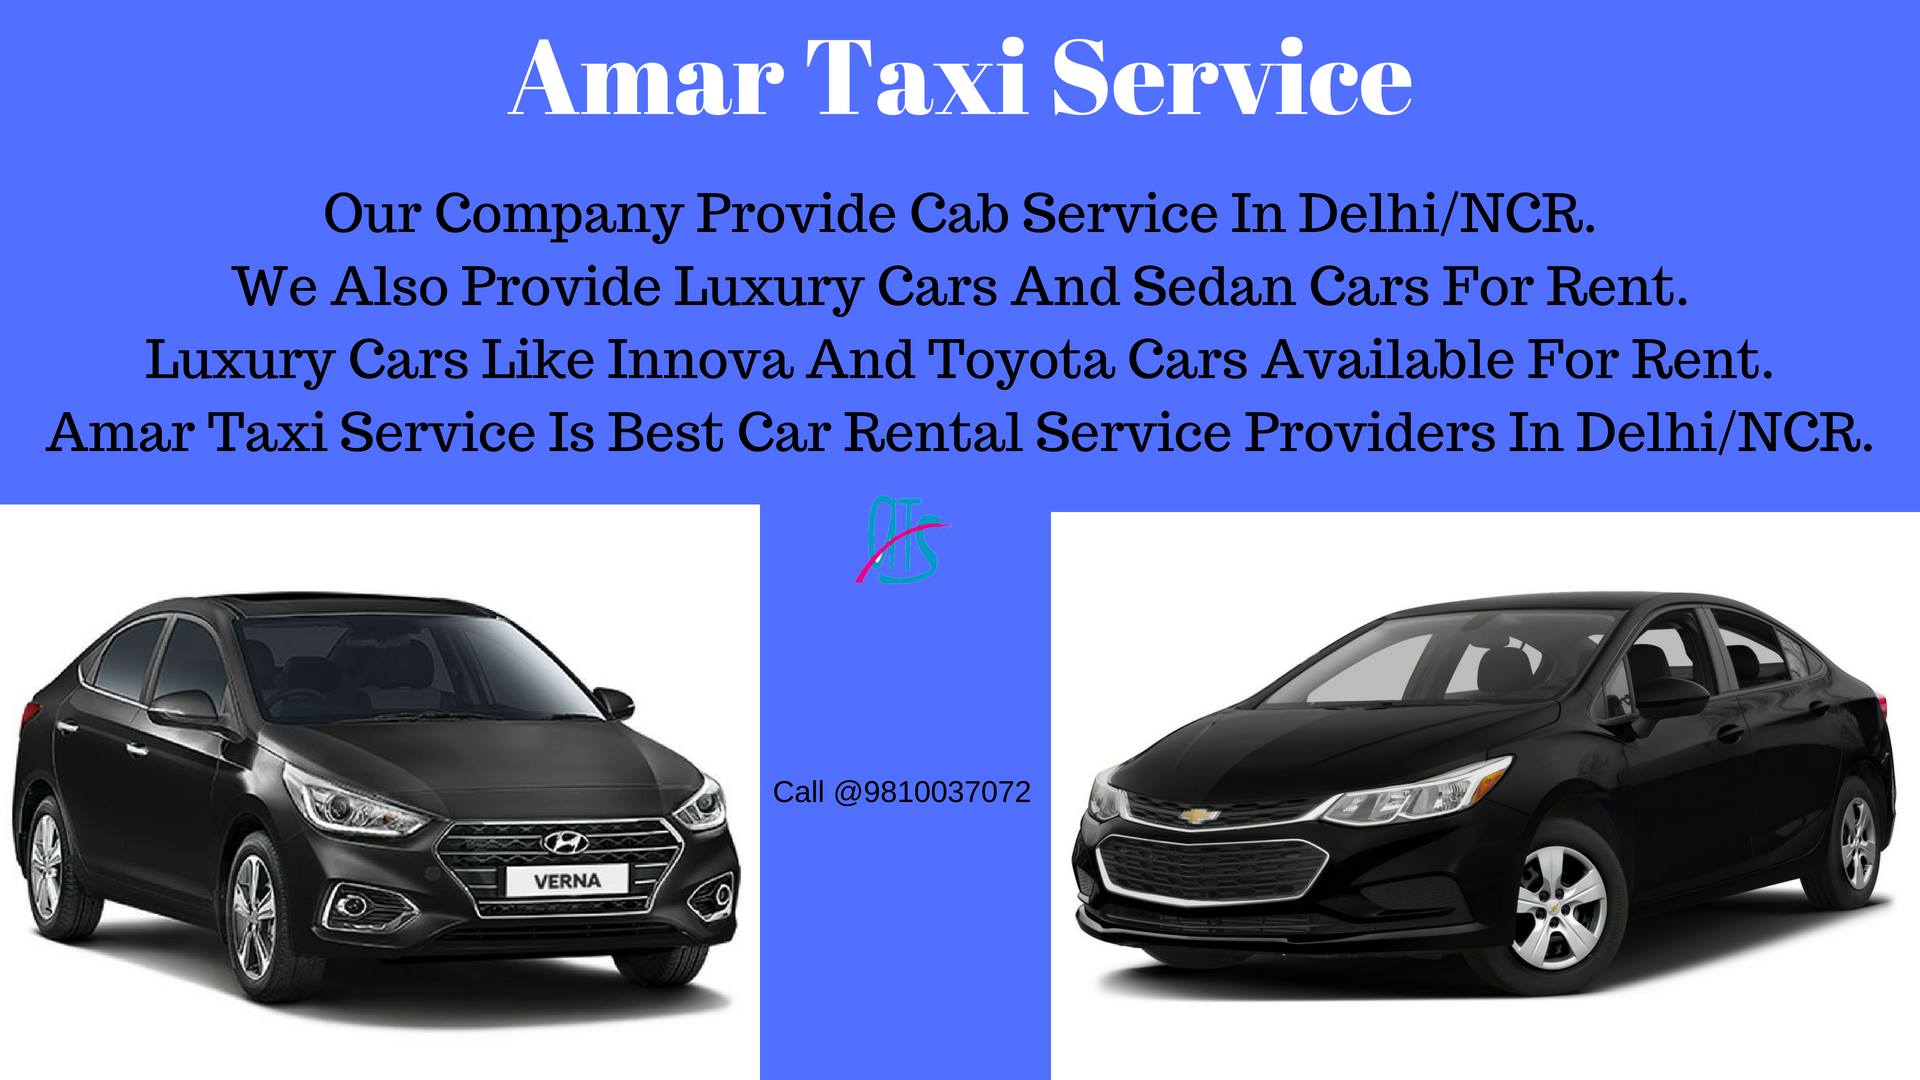 Amar Taxi Services Pvt Ltd